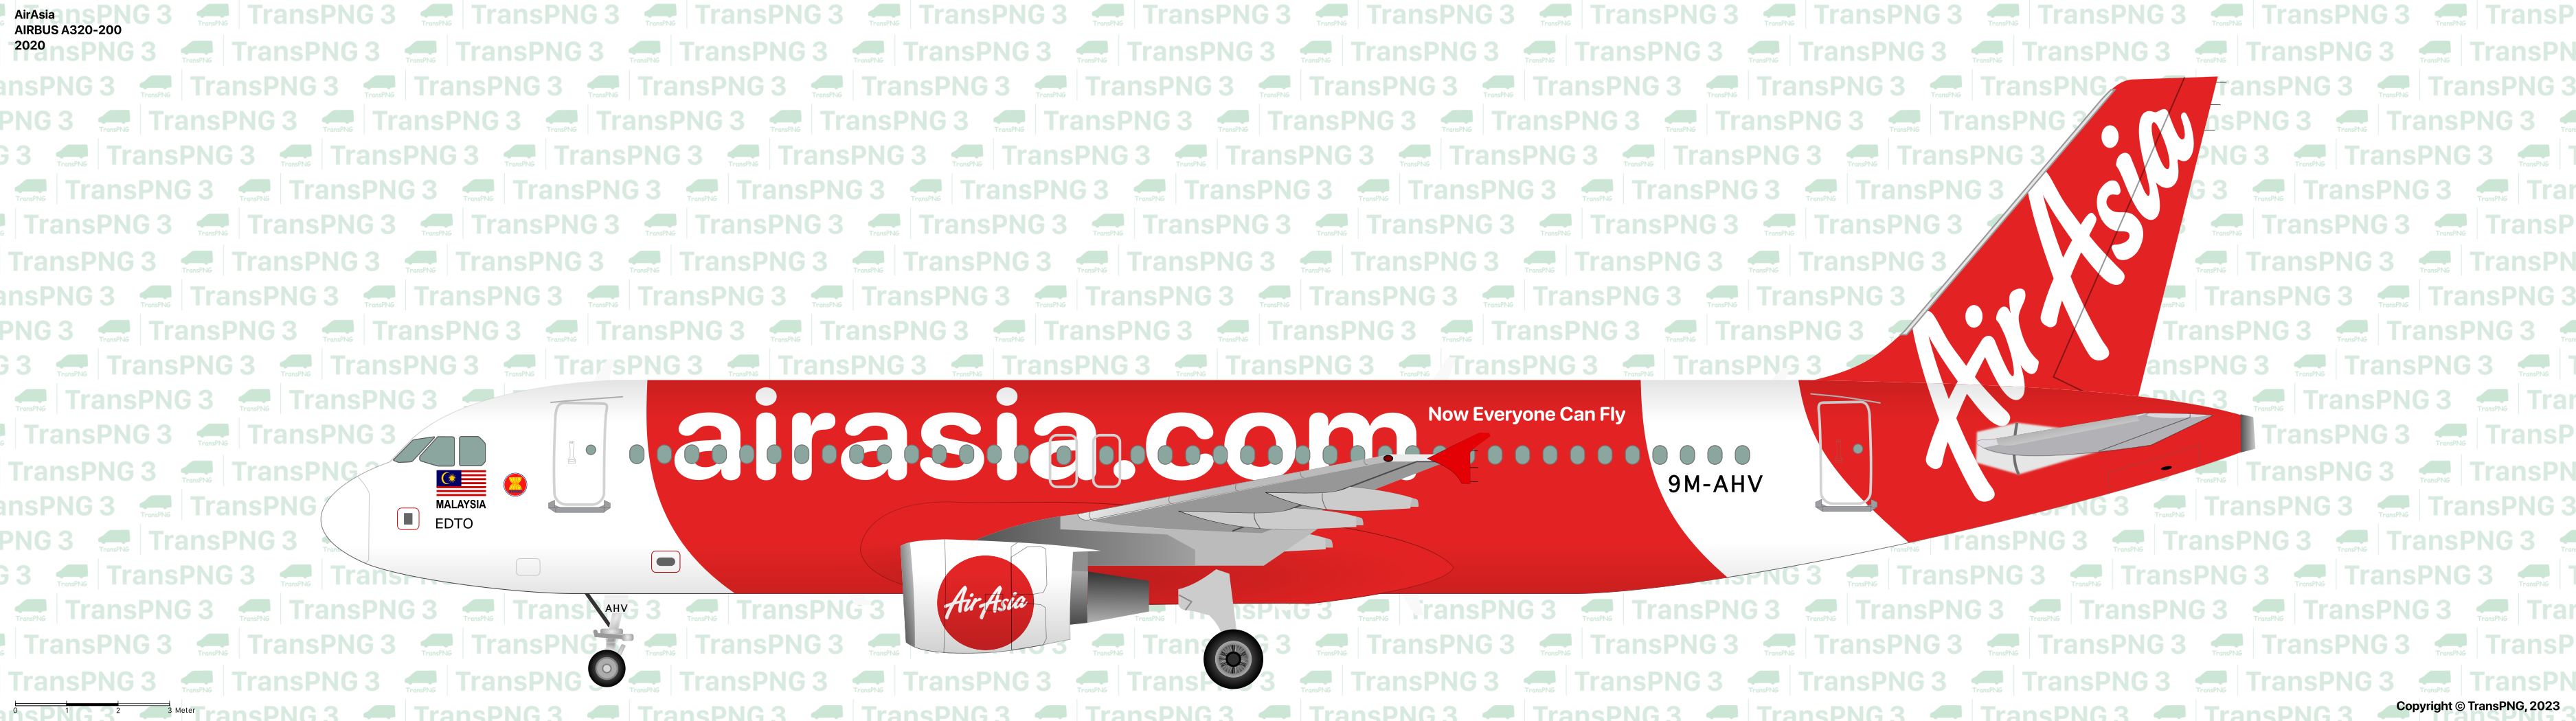 TransPNG.net | 分享世界各地多種交通工具的優秀繪圖 - 客機 53190494230_348291d138_o